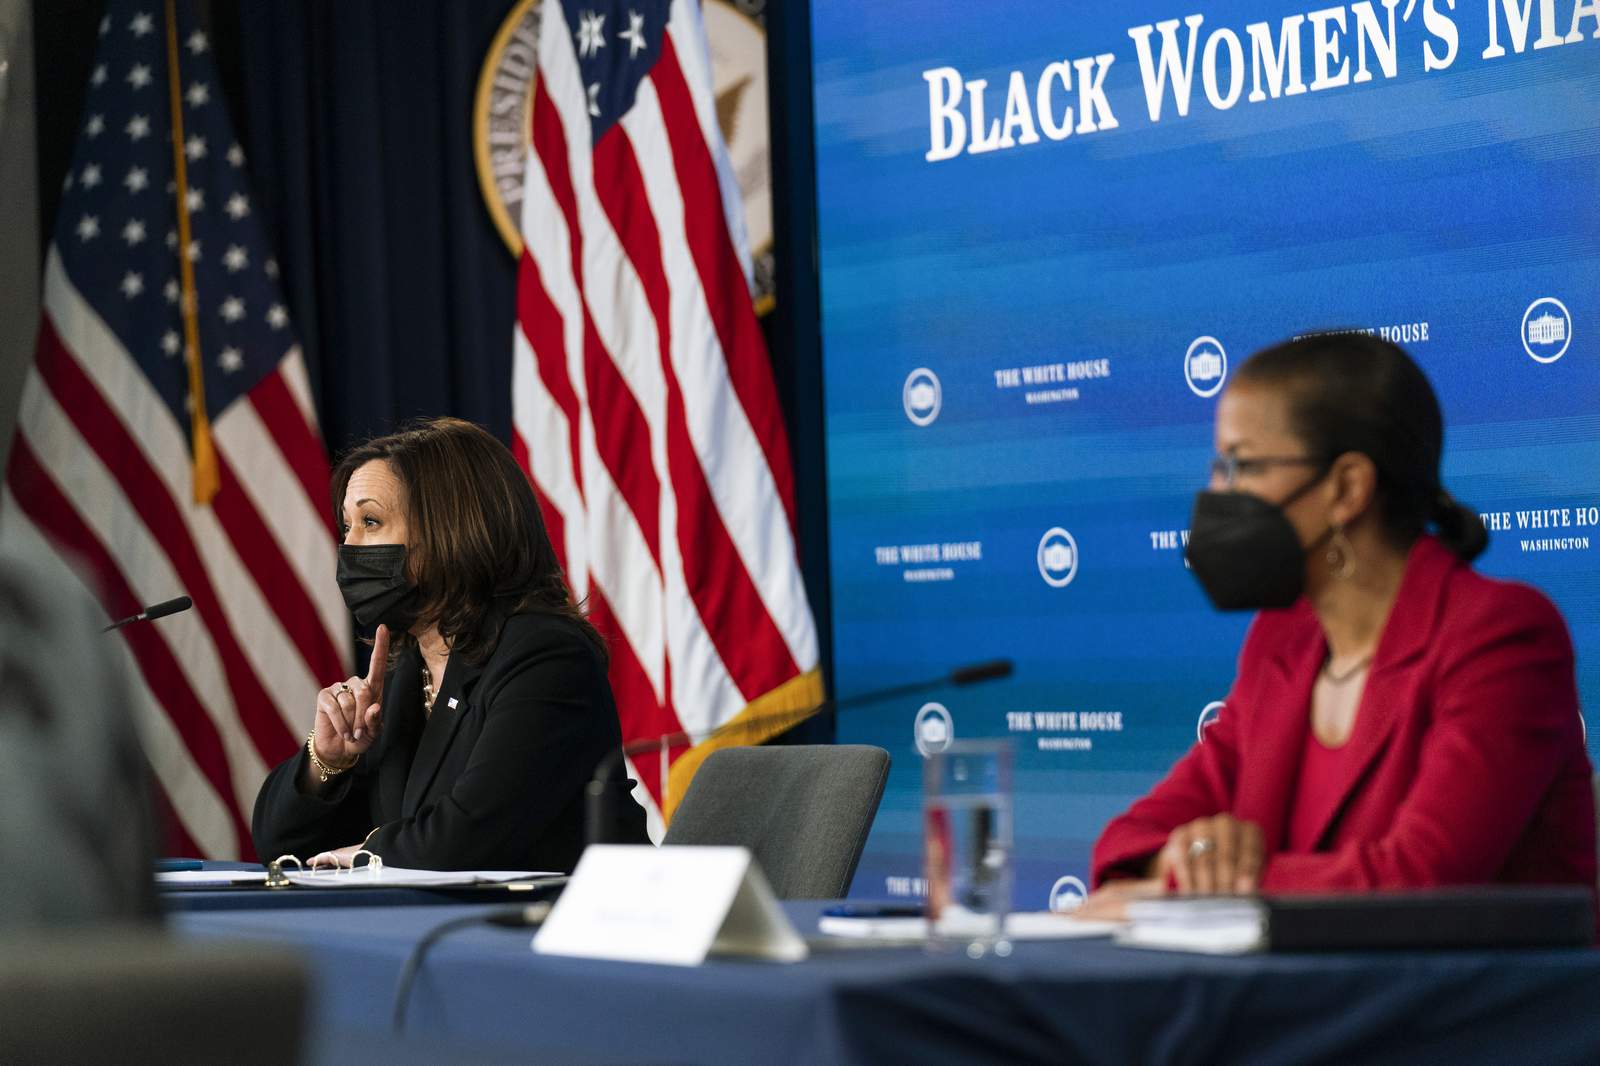 Harris highlights pregnancy difficulties facing Black women